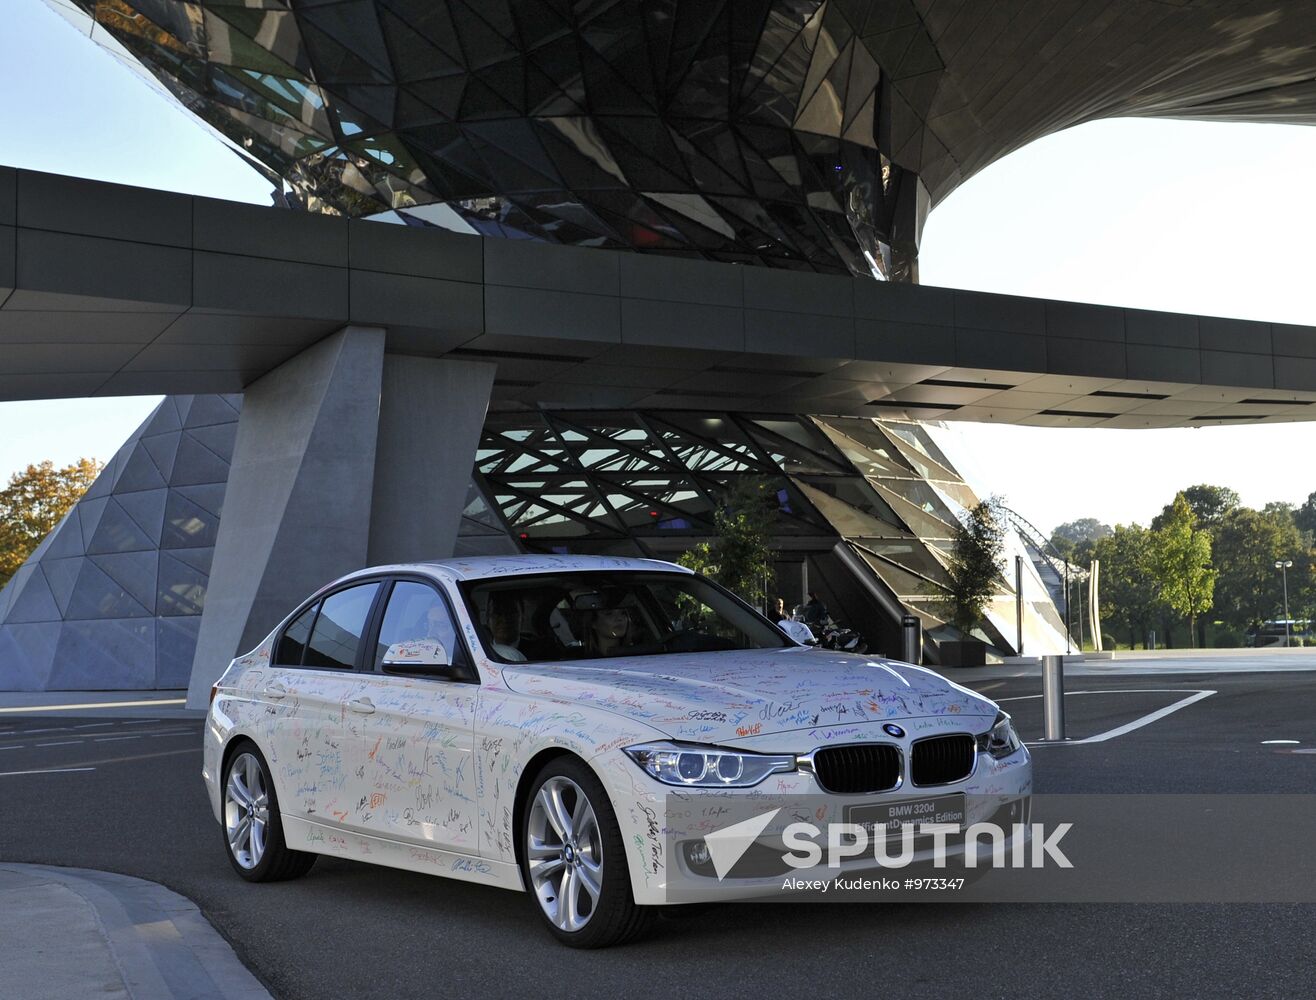 BMW presents new generation 3 series Sedan